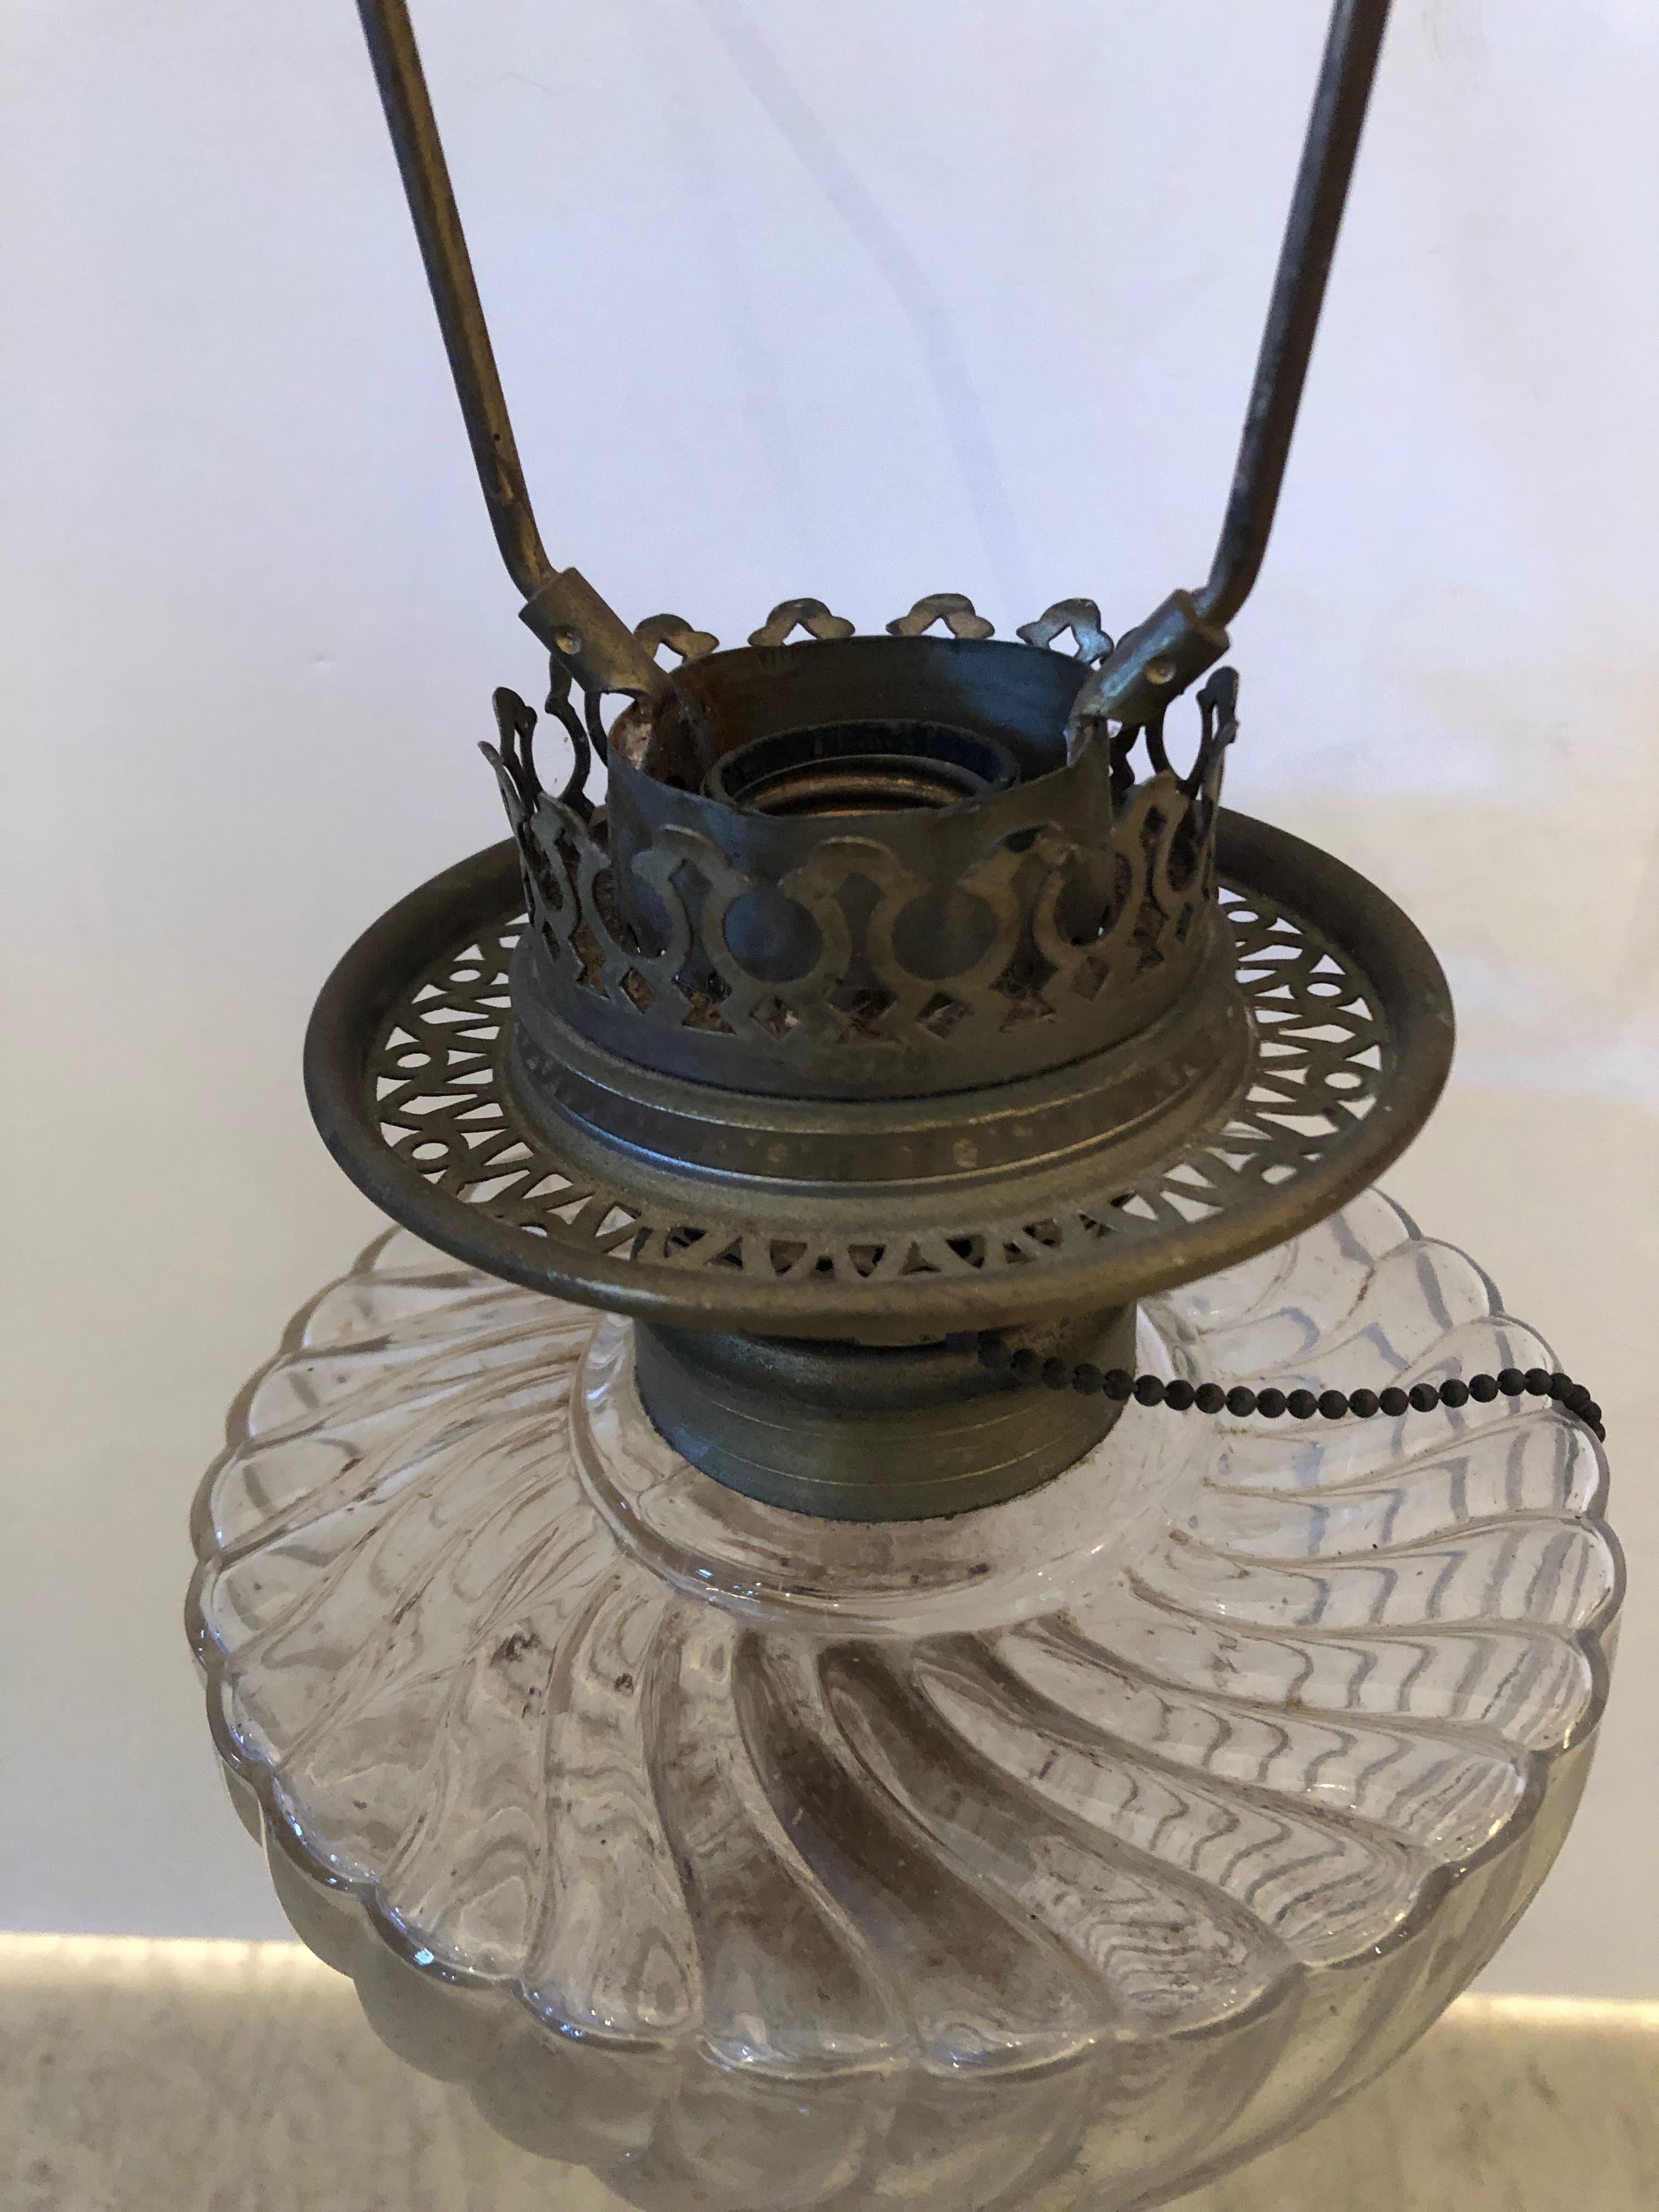 antique baccarat lamp